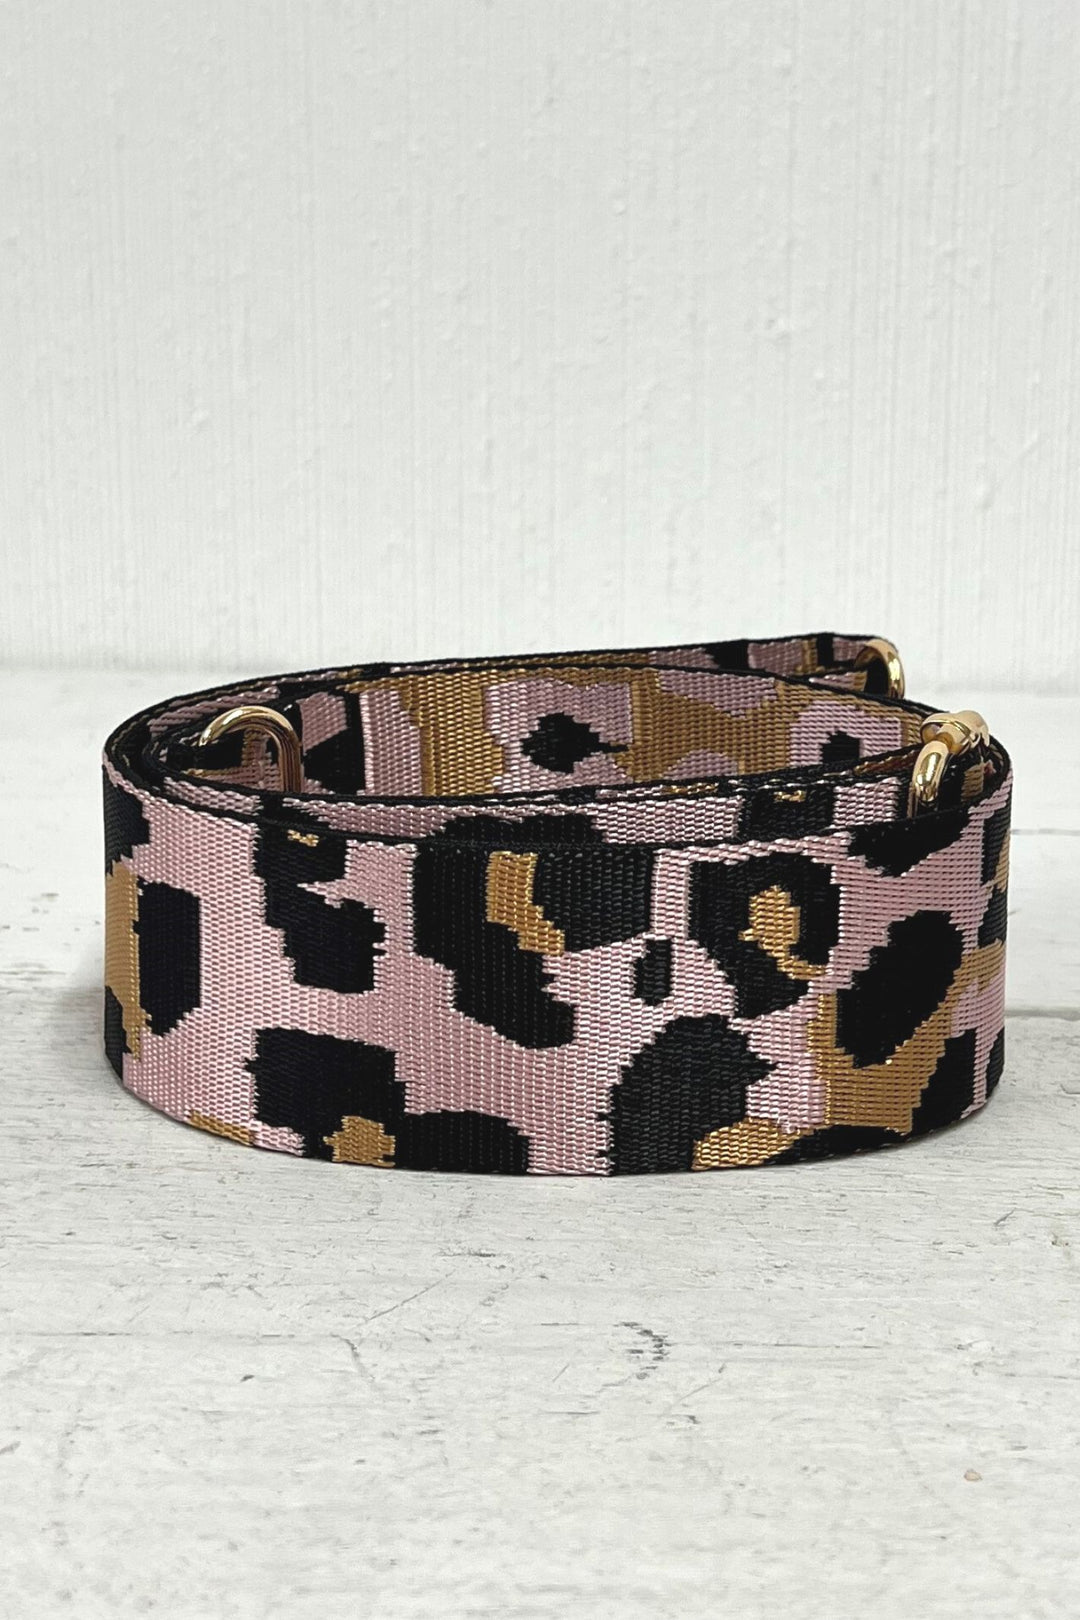 Leopard Print Interchangeable Bag Strap Pink Black Gold - Sugarplum Boutique